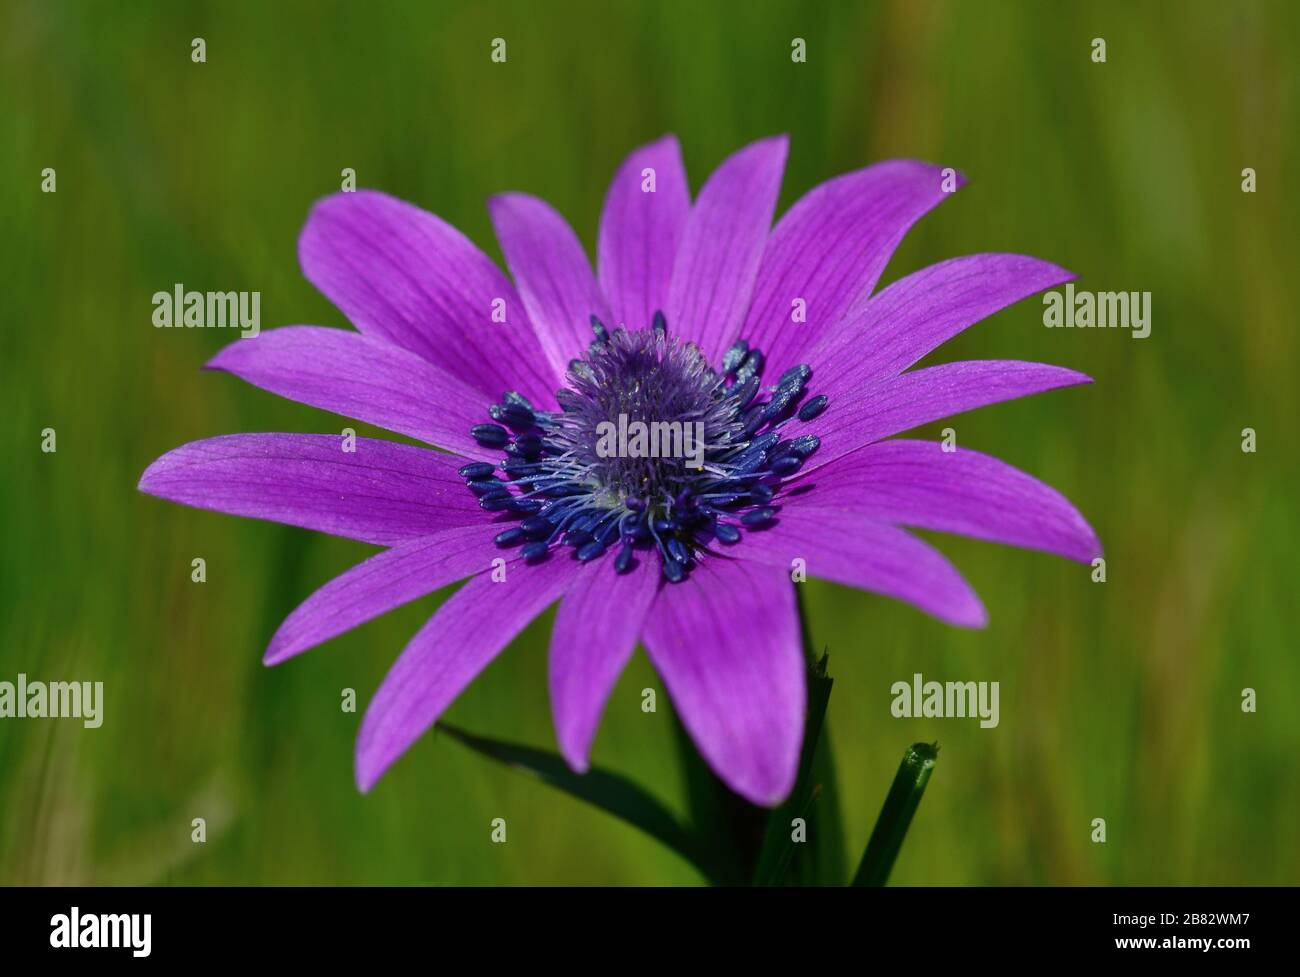 Primer plano de la flor salvaje de Anemone púrpura sobre un fondo verde difuminado Foto de stock